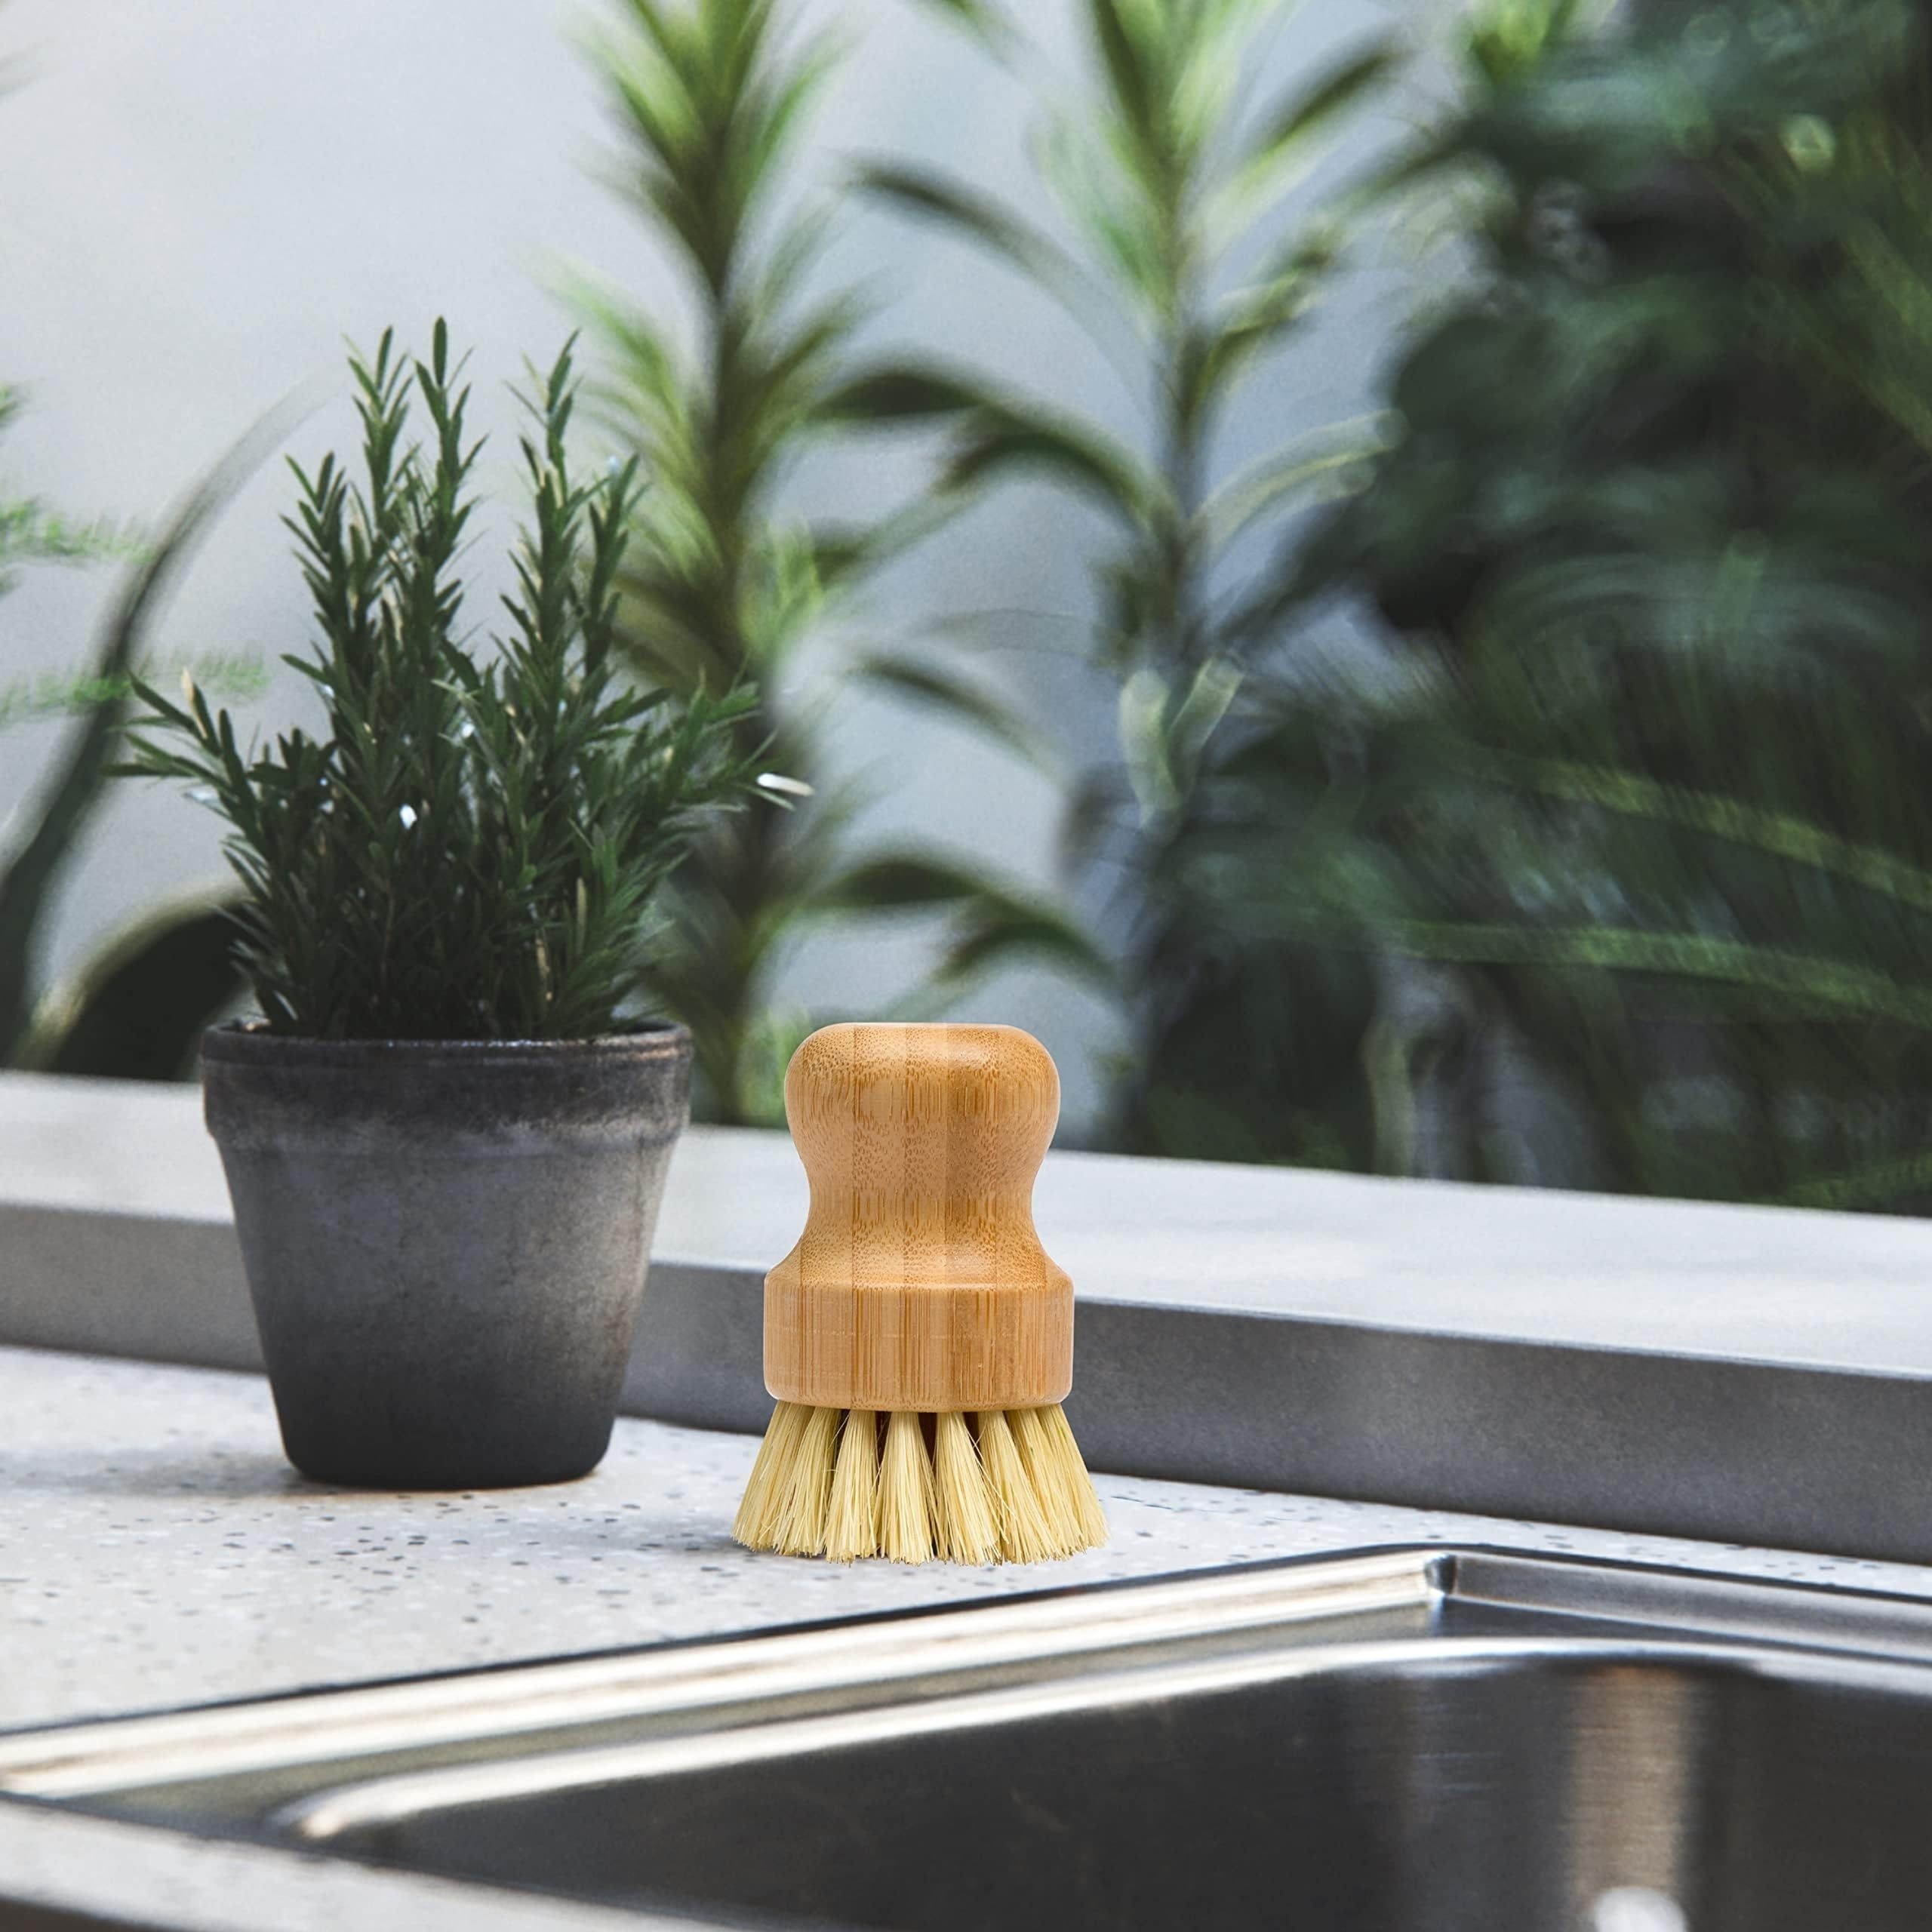 Short Sisal Dish Brush for Kitchen Bathroom Cleaning Produce